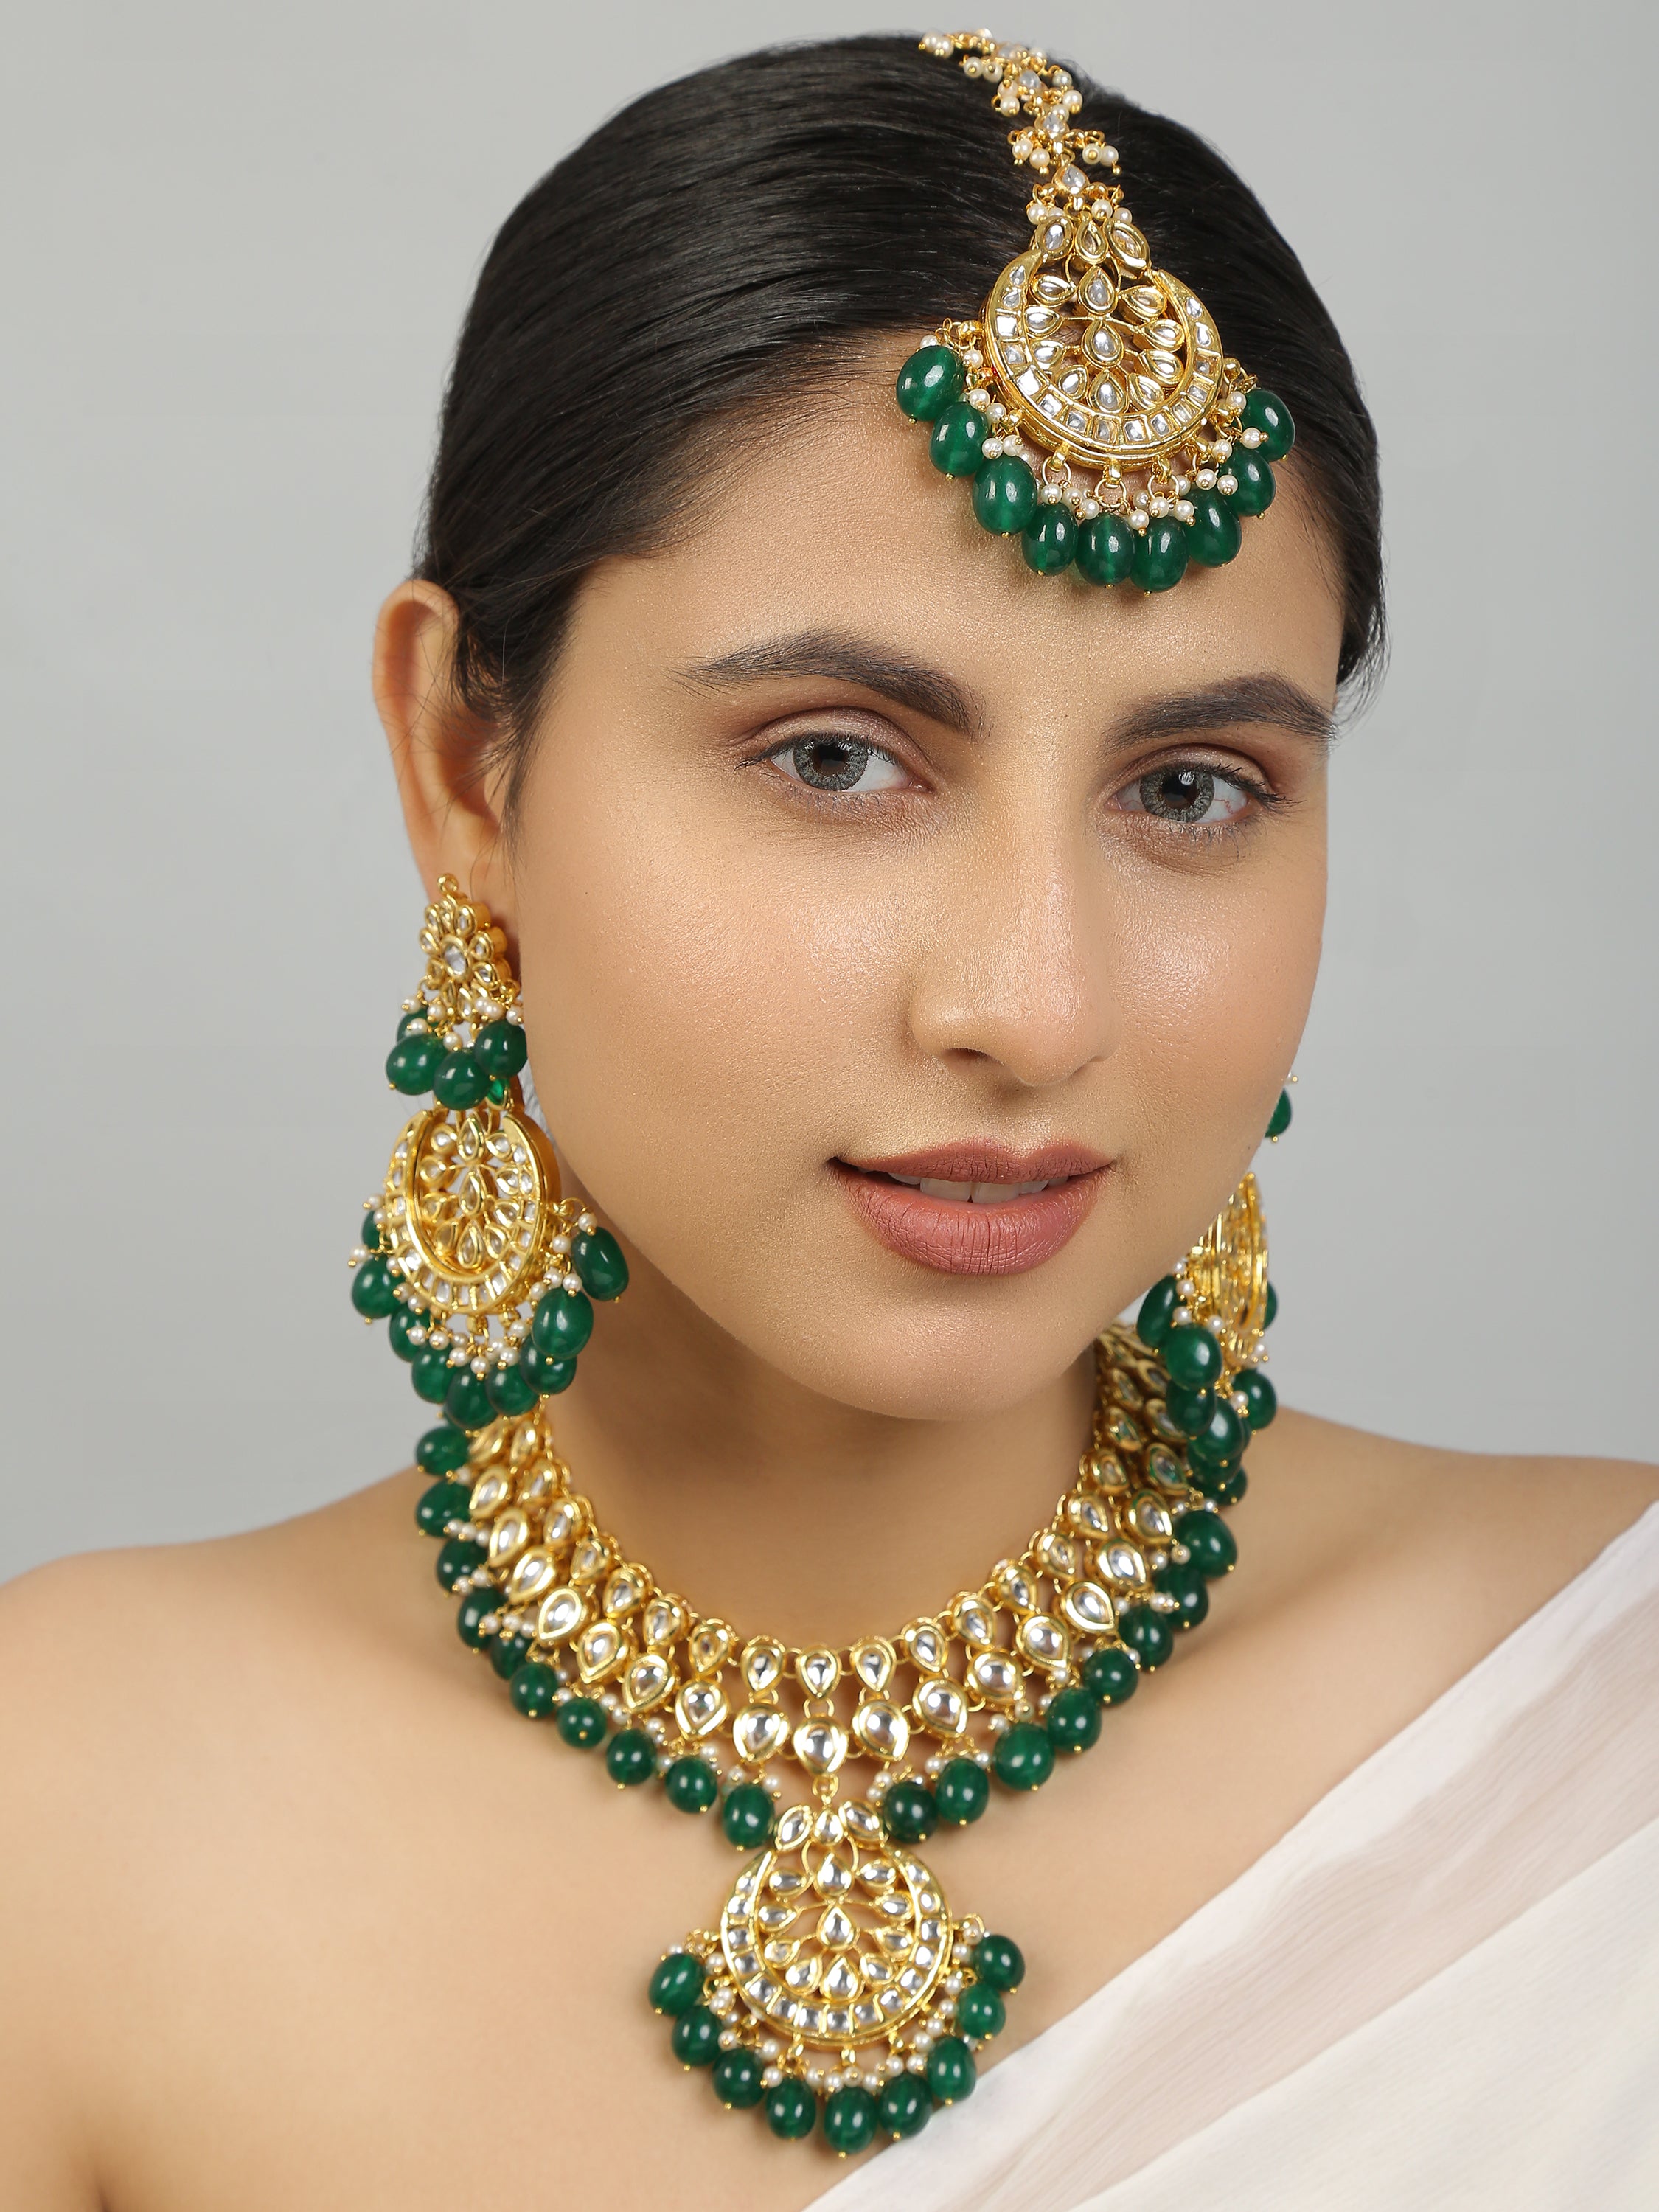 Women's Emerald Beaded Kundan Necklace With Earrings & Maang Tikka - Femizen